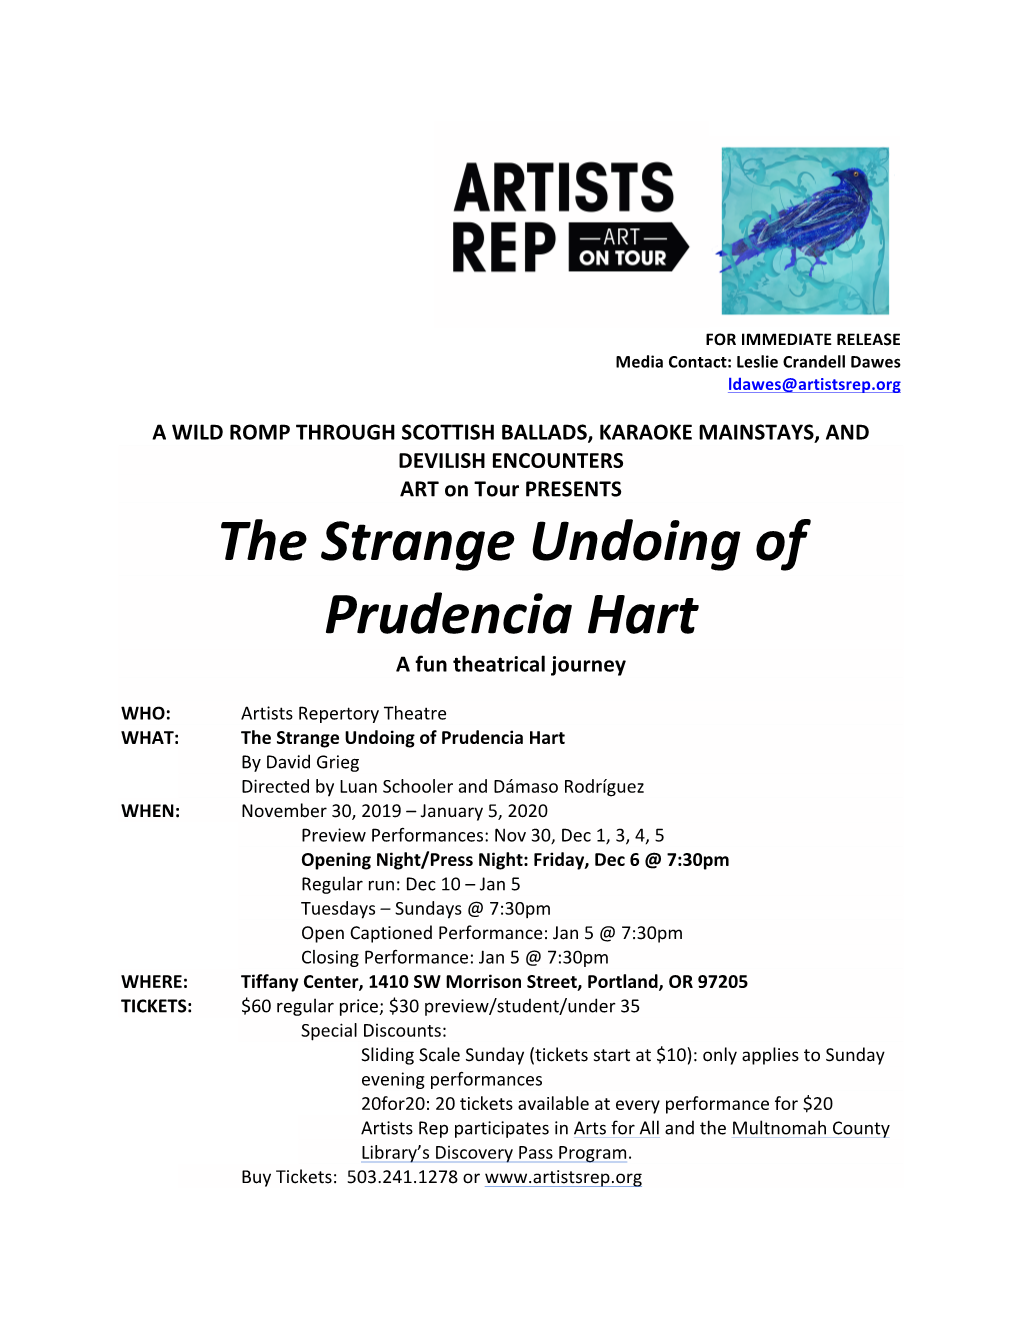 The Strange Undoing of Prudencia Hart a Fun Theatrical Journey